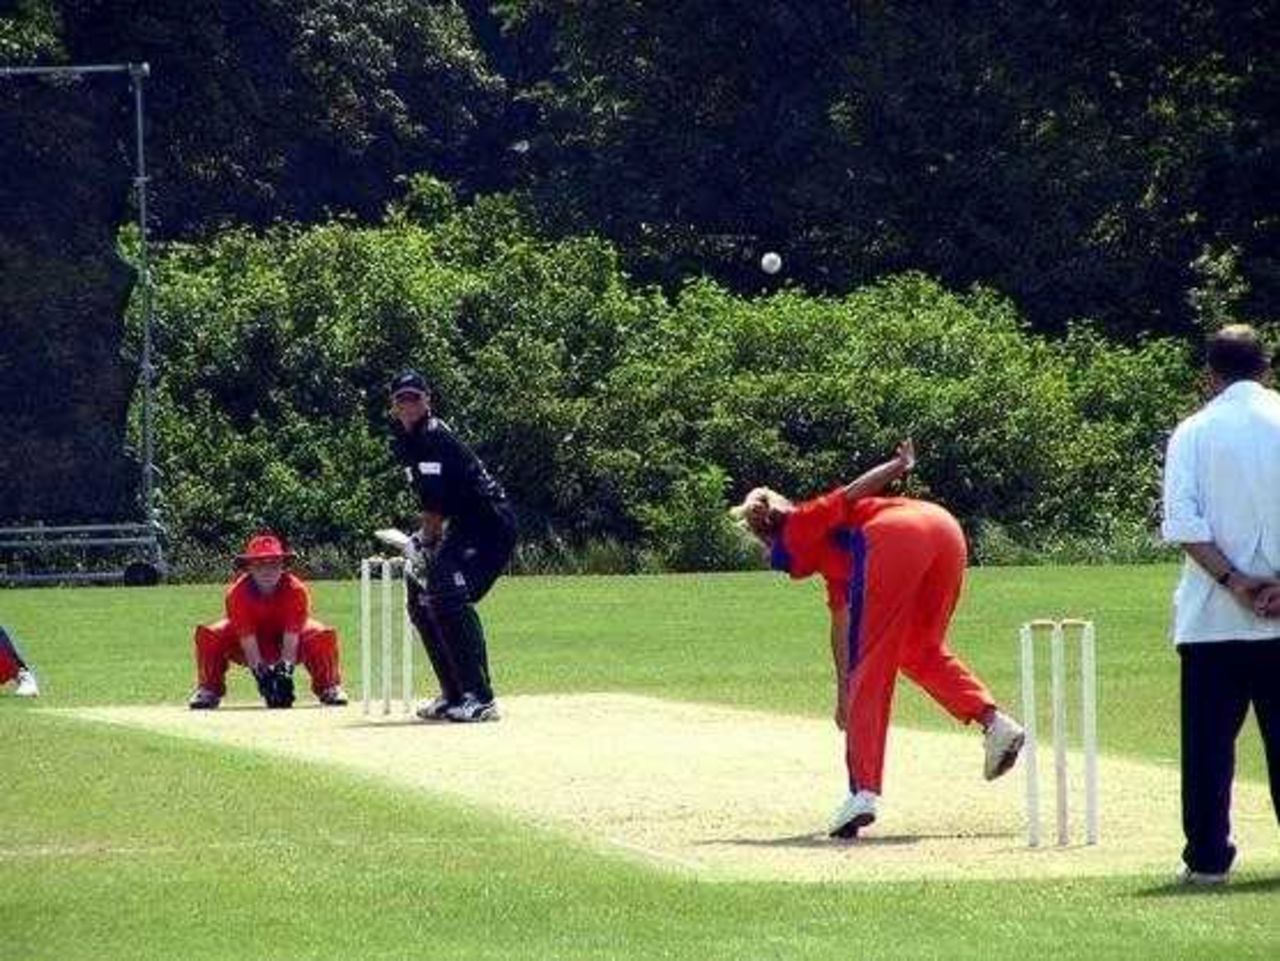 Rebecca Rolls batting for New Zealand against Netherlands, 25 June 2002